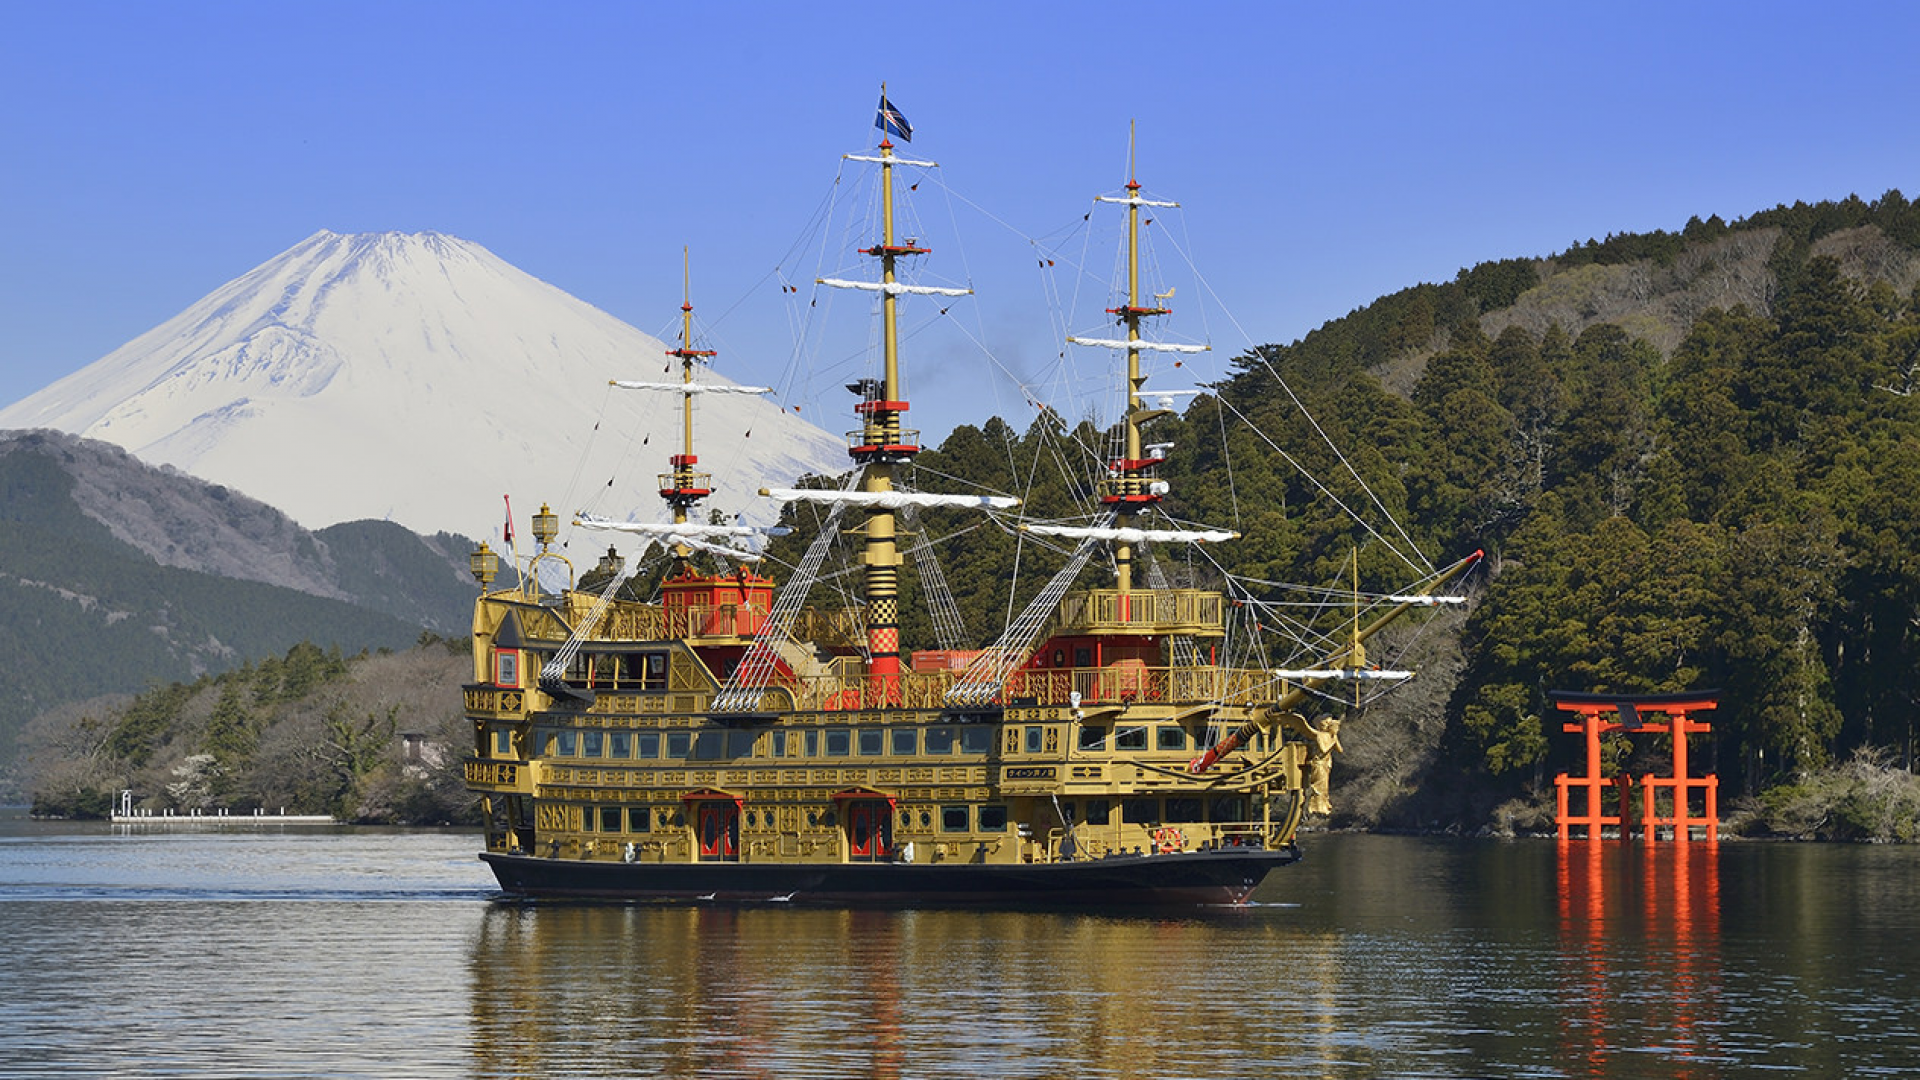 Barco pirata de Hakone (barco turístico de Hakone)